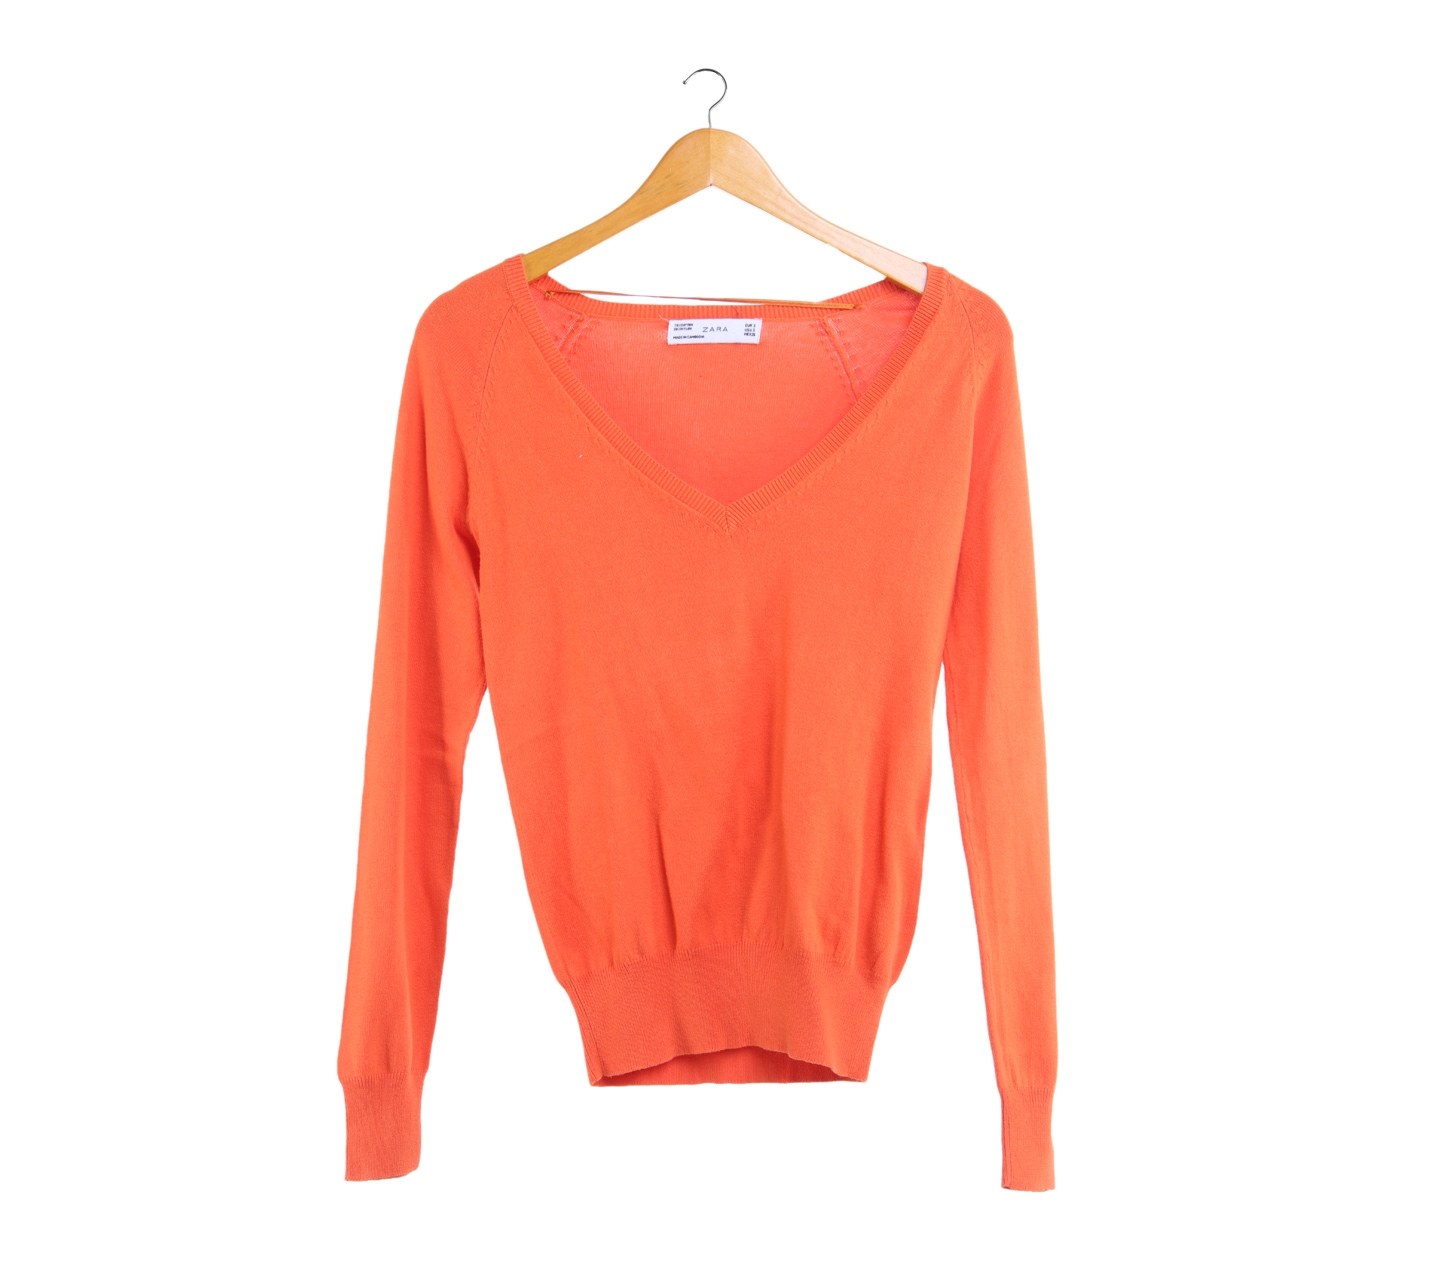 Zara Orange Knit Sweater